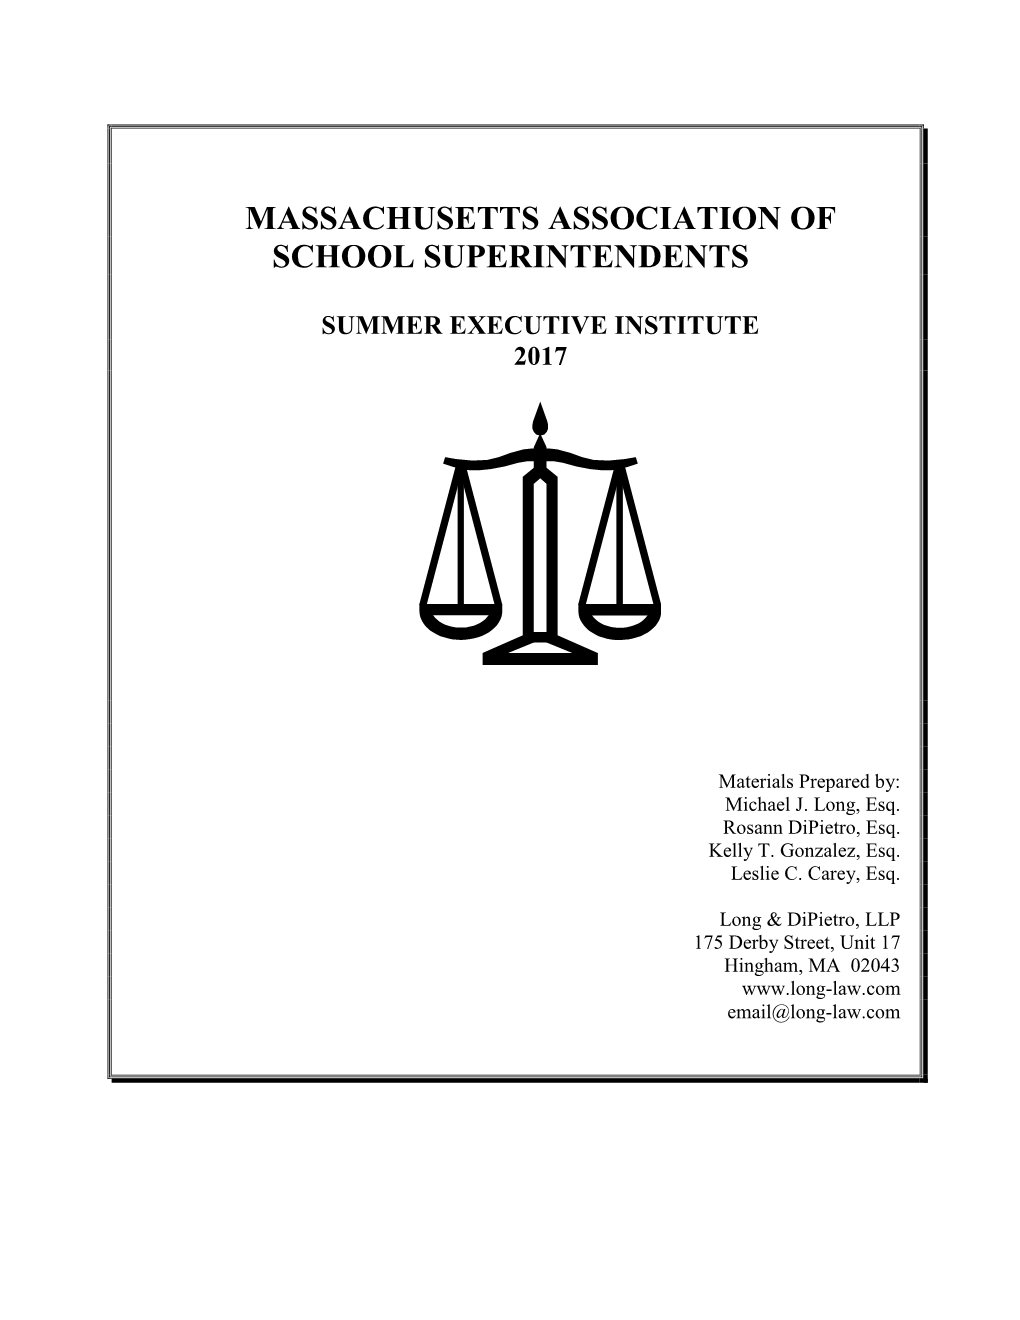 Massachusetts Association of School Superintendents